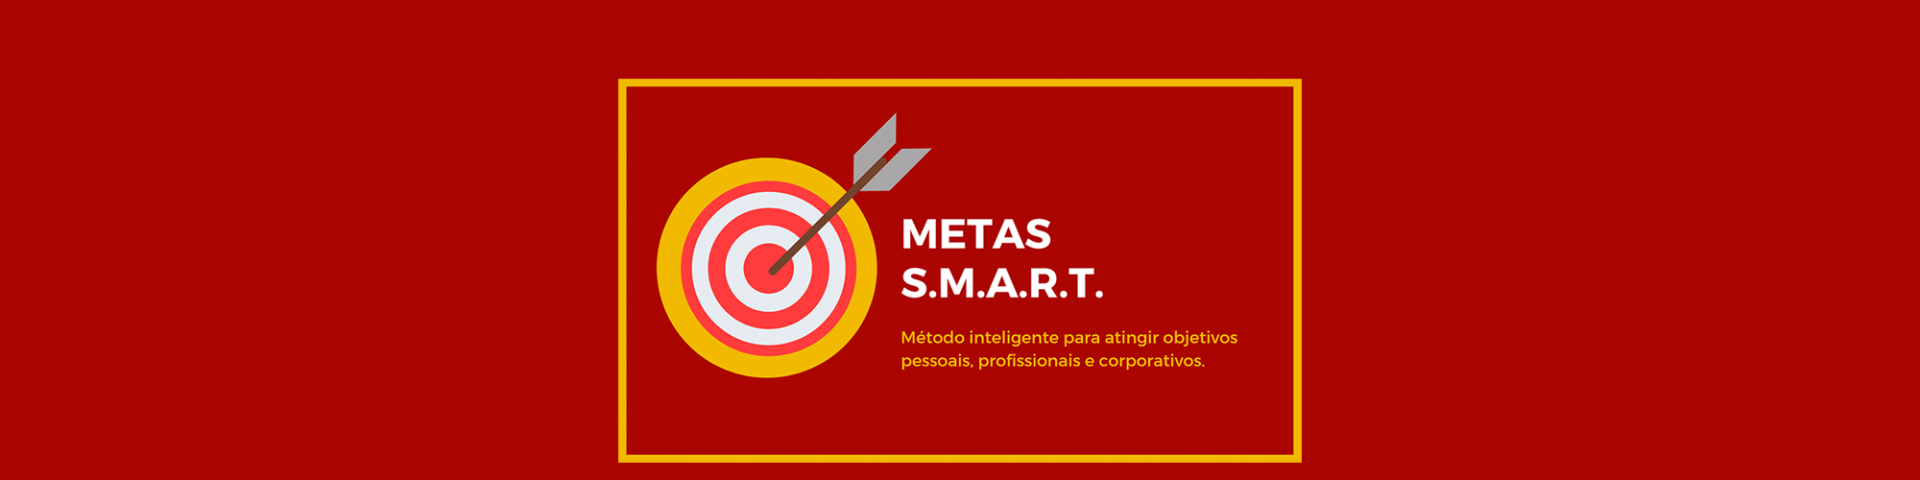 Metas Smart2